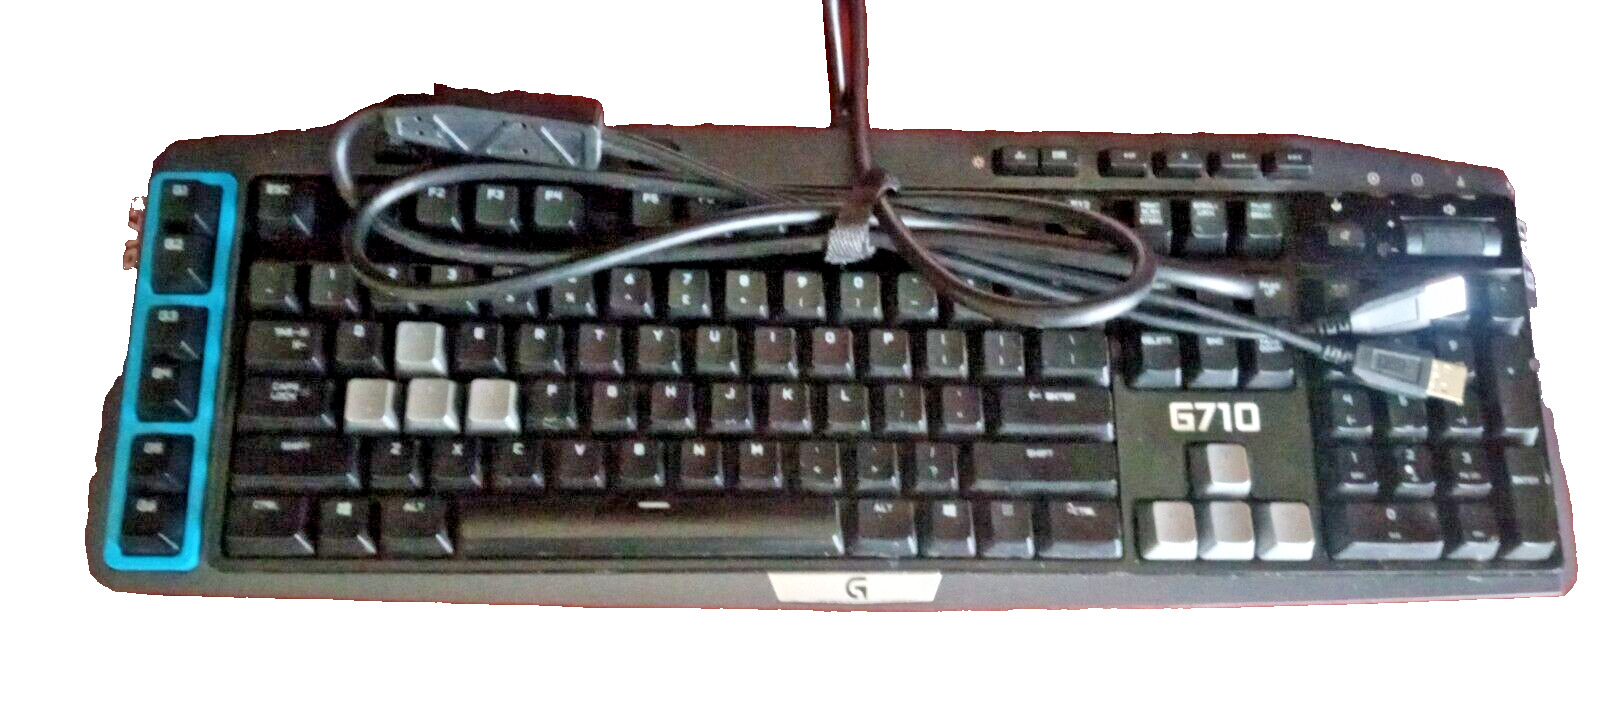 Logitech G710 Mechanical Gaming Keyboard P/N 820-006810 Working, Dual USB Wire